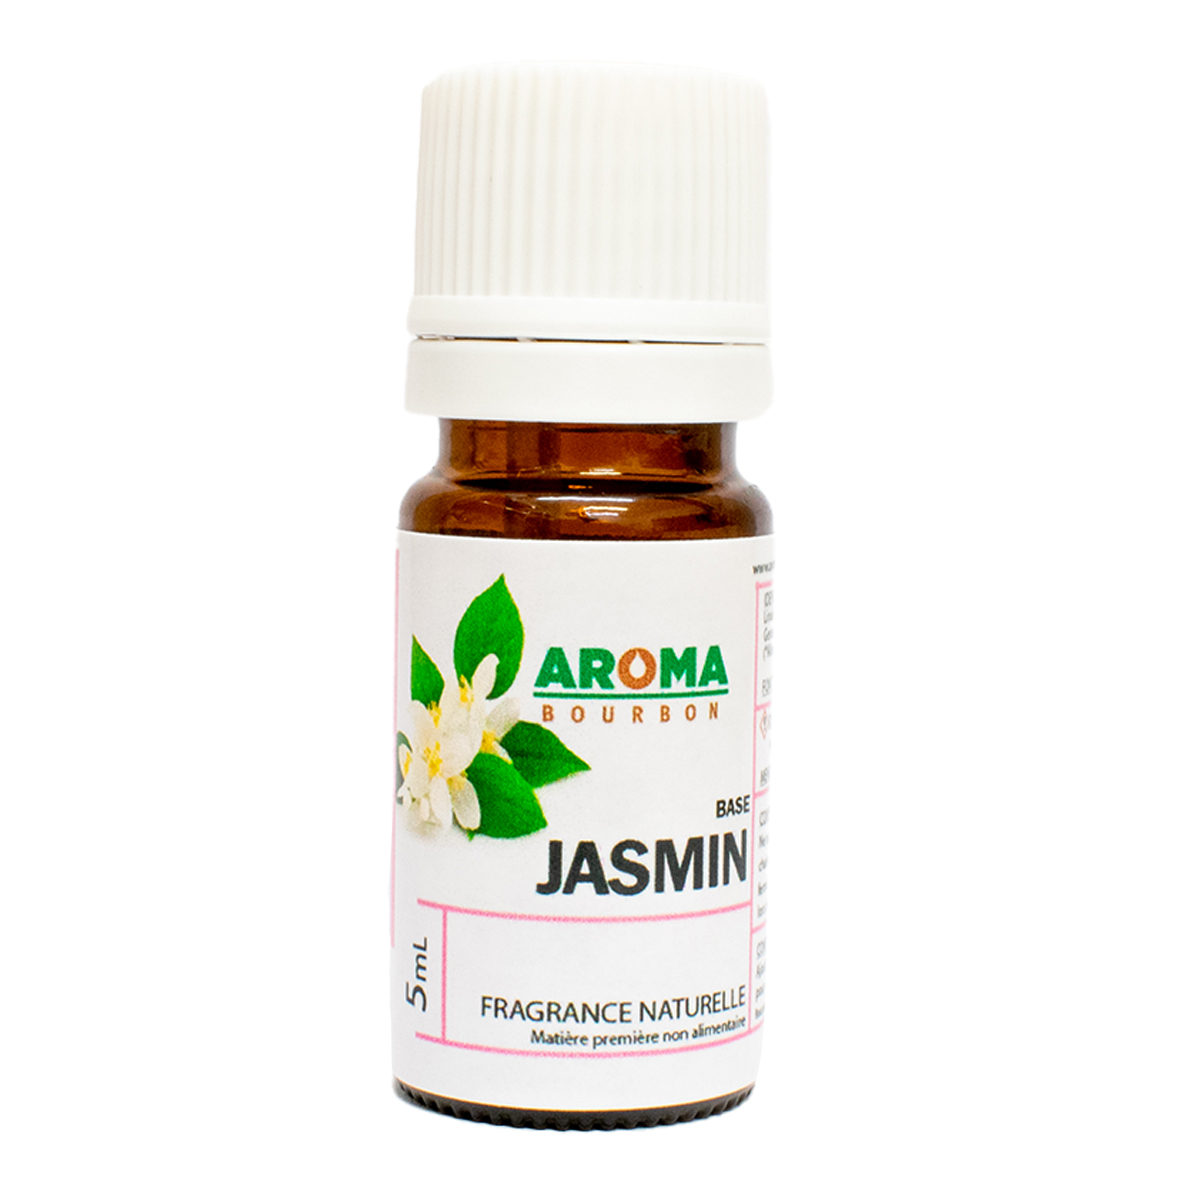 JASMIN - Fragrance naturelle